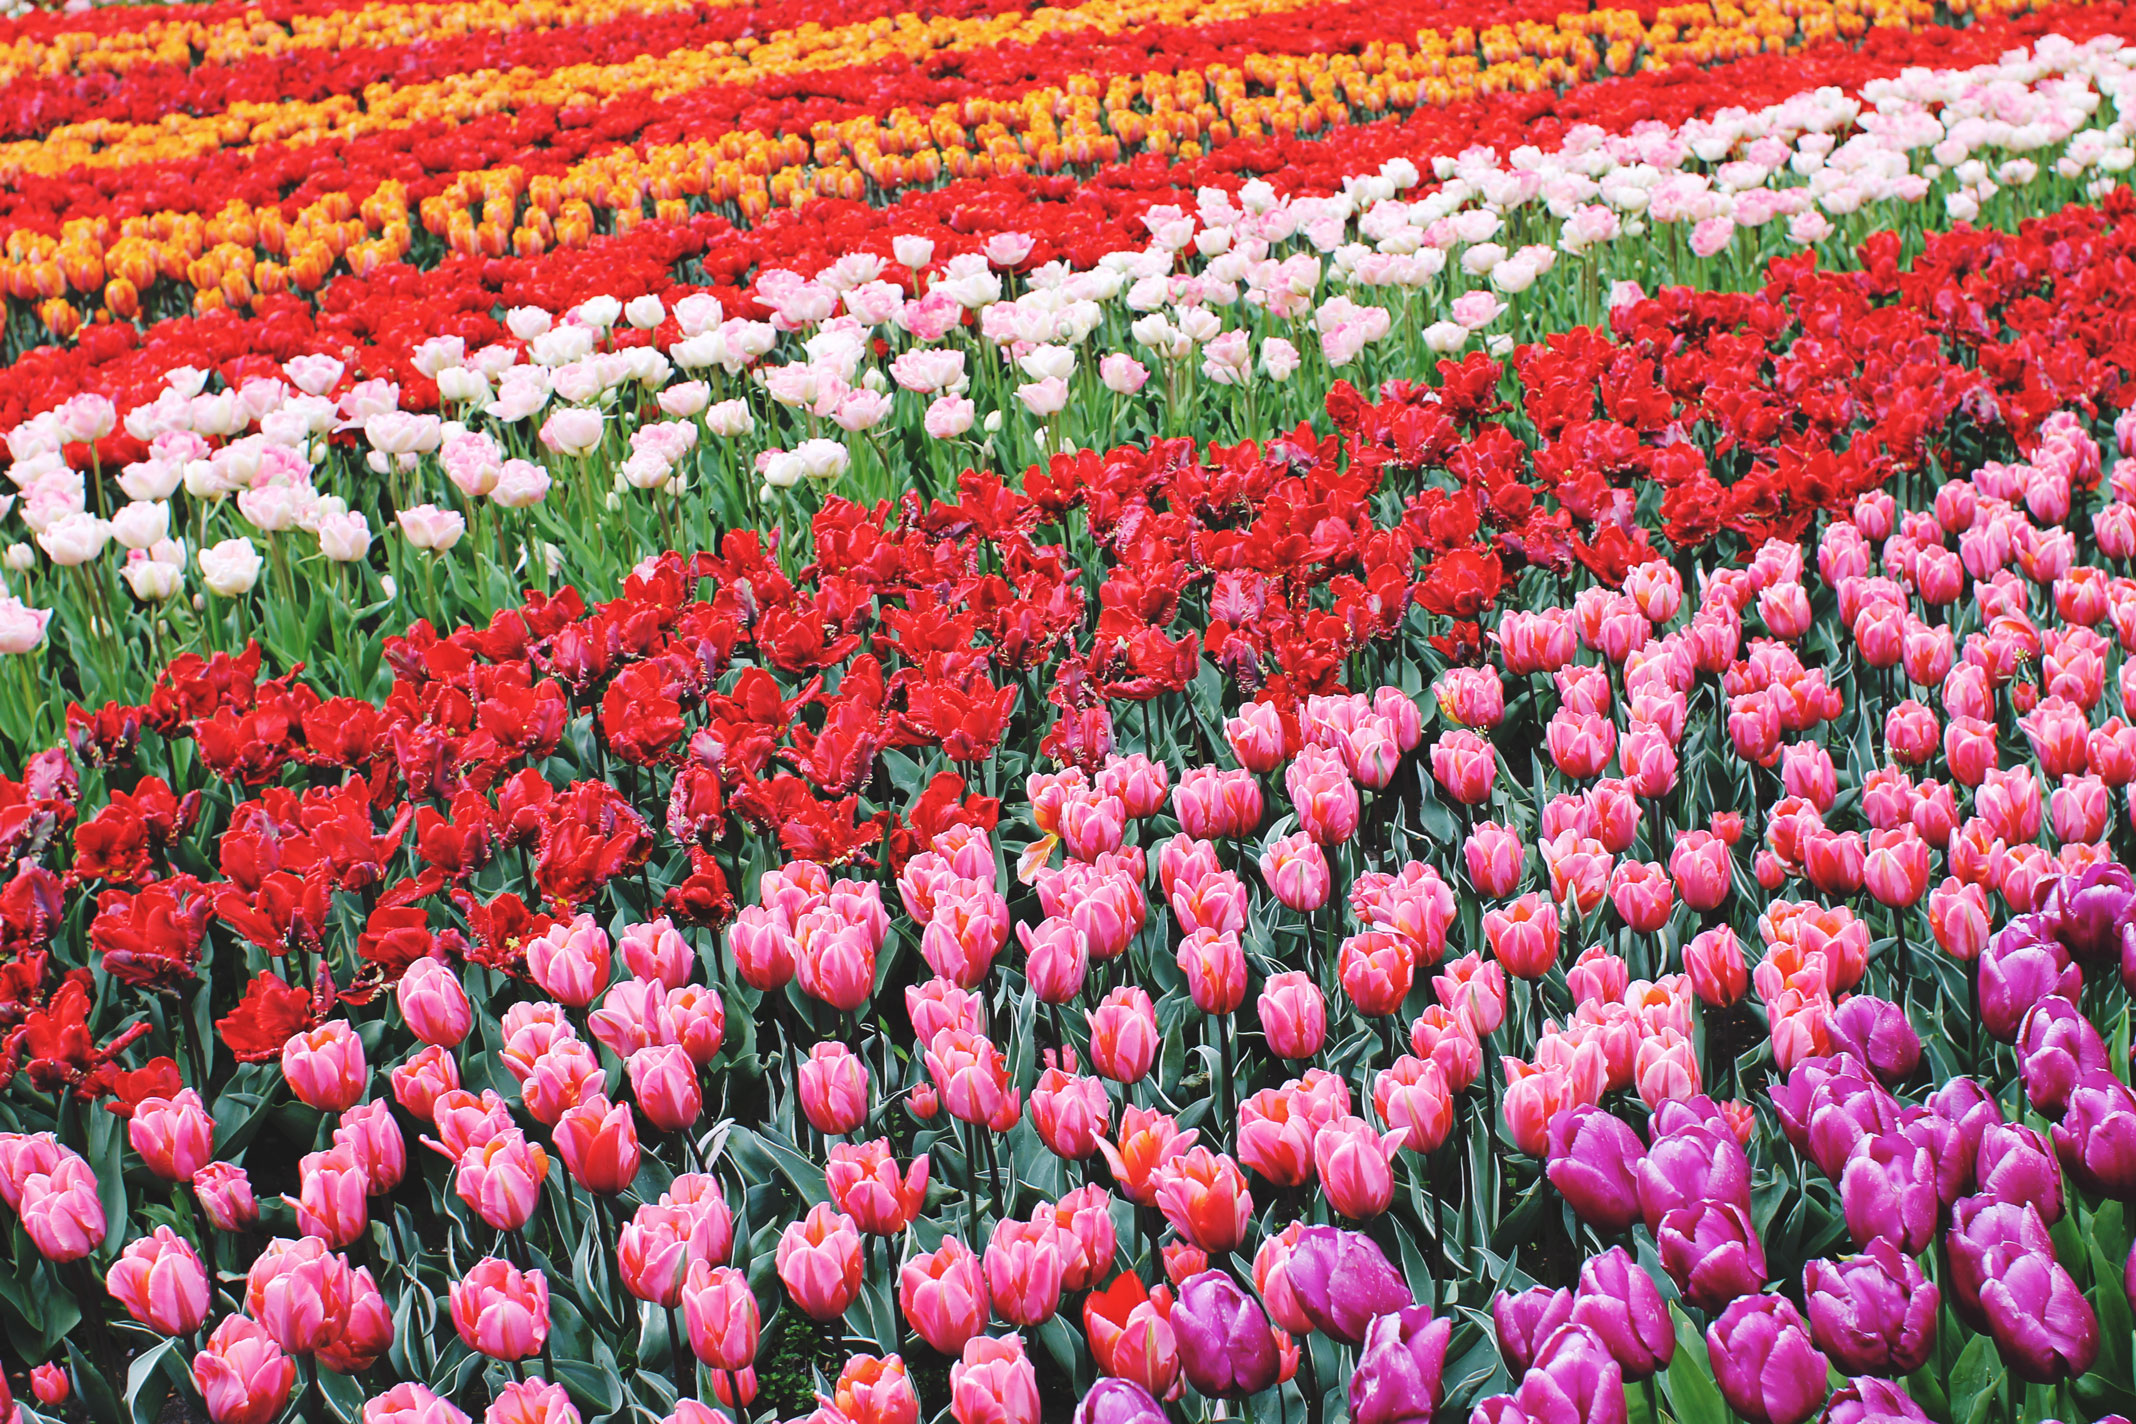 STYLEAT30 Travel + Fashion Blog - Keukenhof Gardens and Tulip Fields Tour from Amsterdam - Holland Tulips - 15